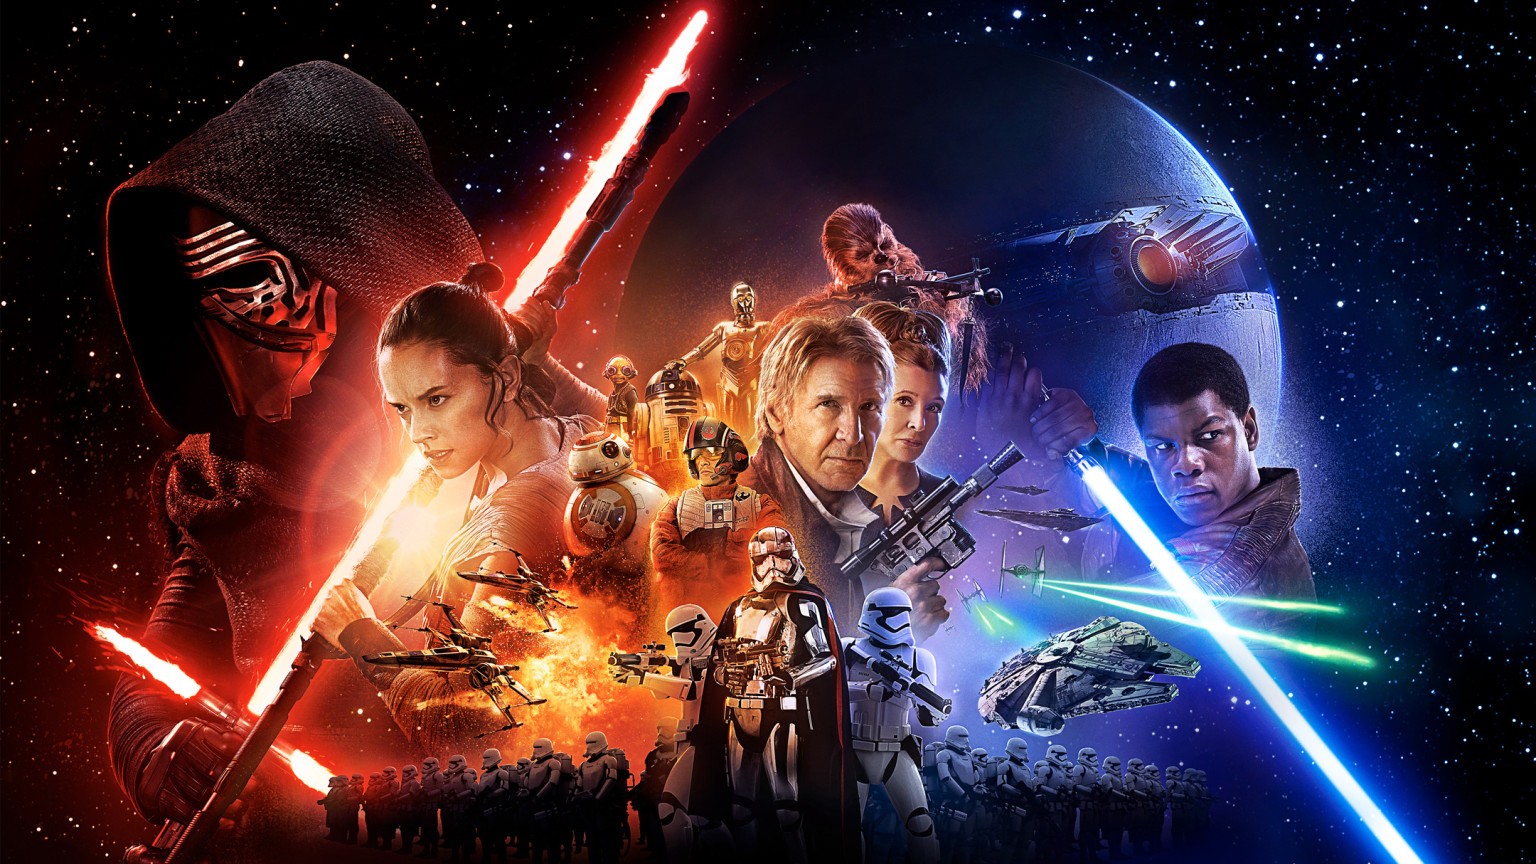 Star Wars The Force Awakens Star Wars Kylo Ren Han Solo Captain Phasma Stormtrooper Chewbacca C 3PO  1536x864